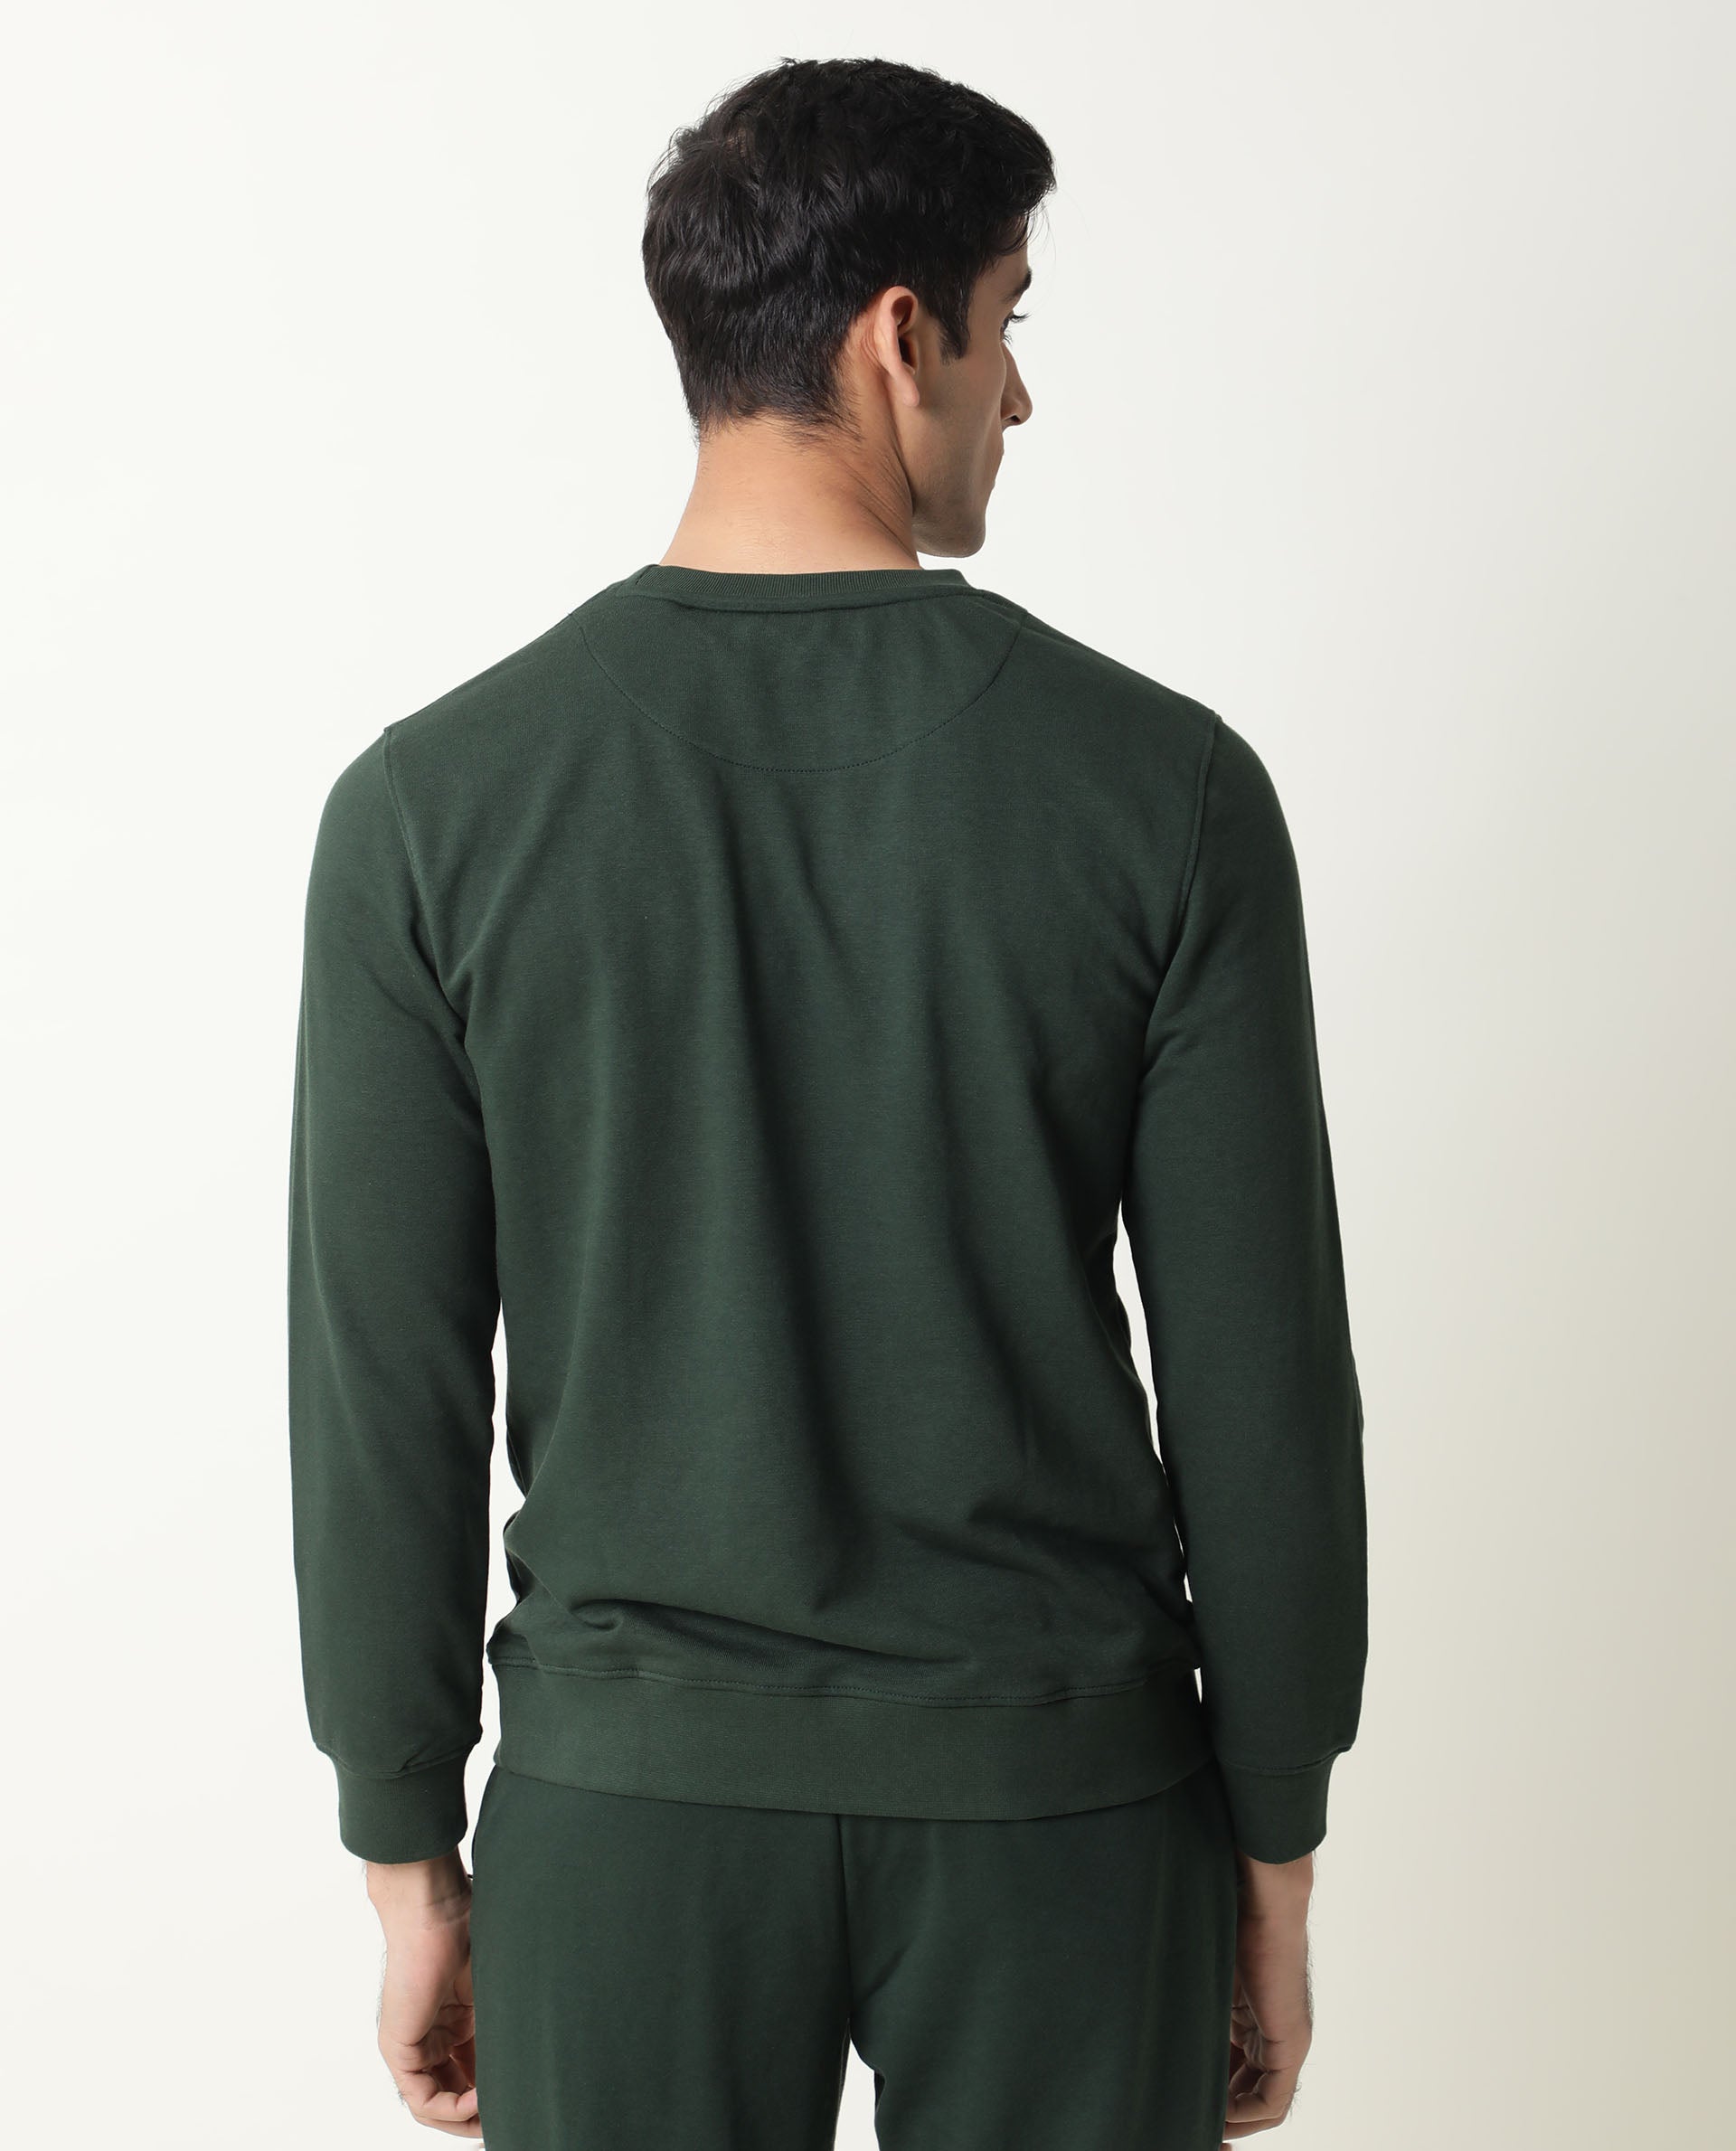 Green & Yellow Sweat Pants – Rare Goods Clothing